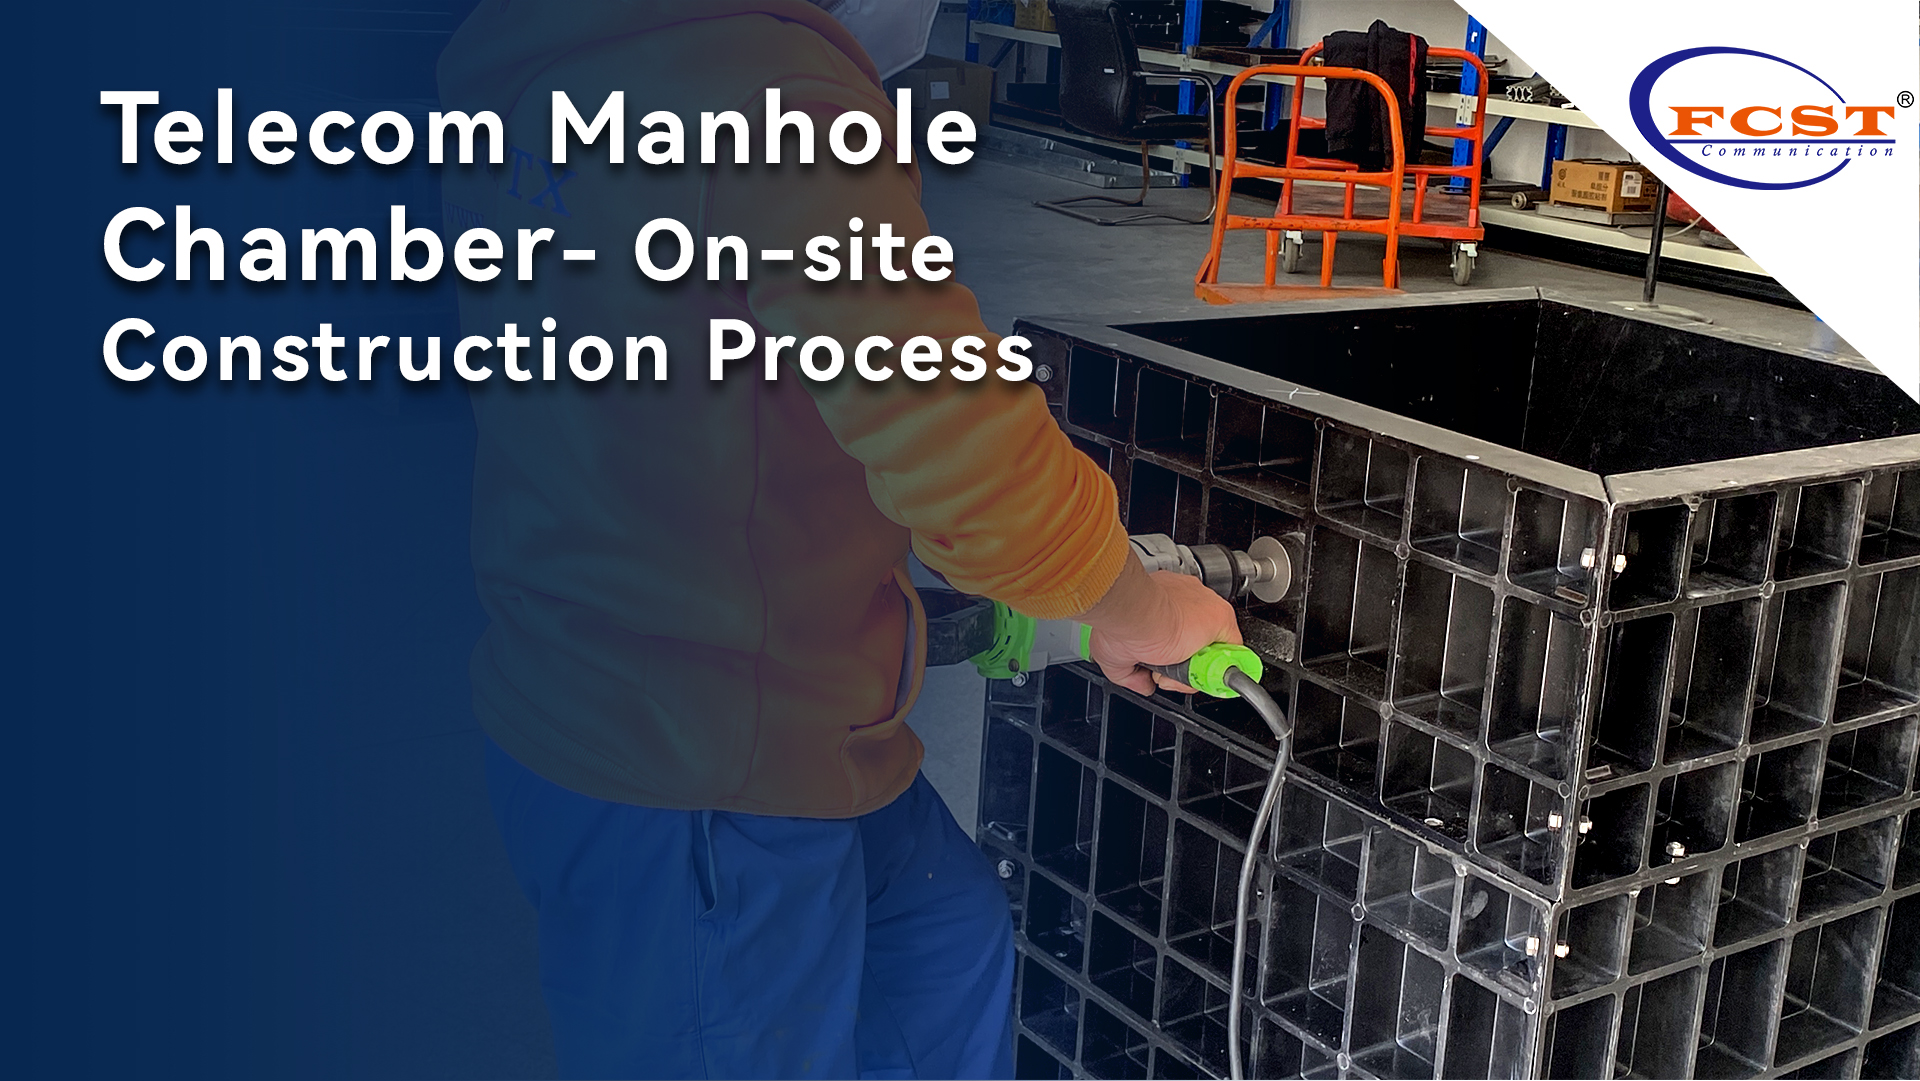 Telecom Manhole Chamber- On-site Construction Process